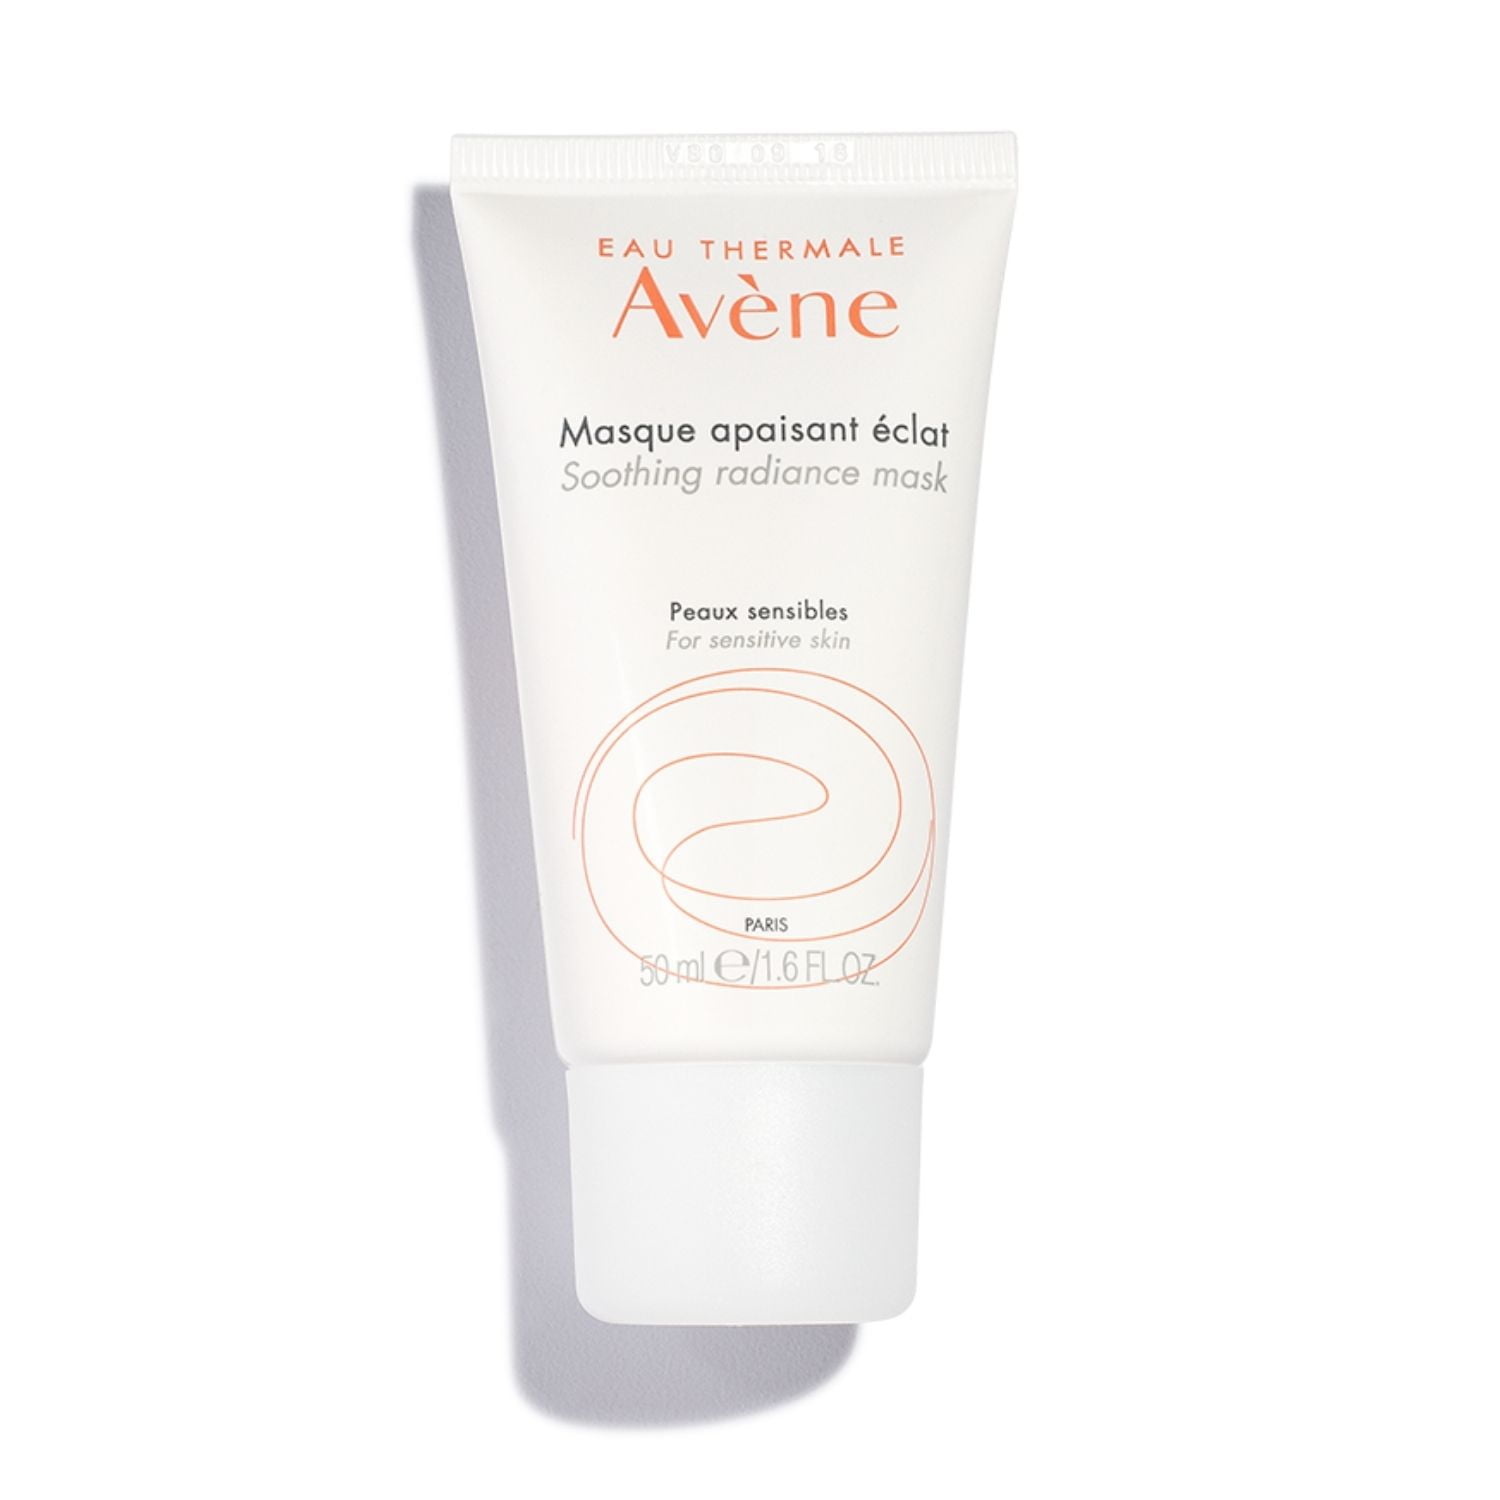 Avene Thermale Soothing Radiance Mask For Sensitive Skin 50 ml 1.6 oz - Walmart.com